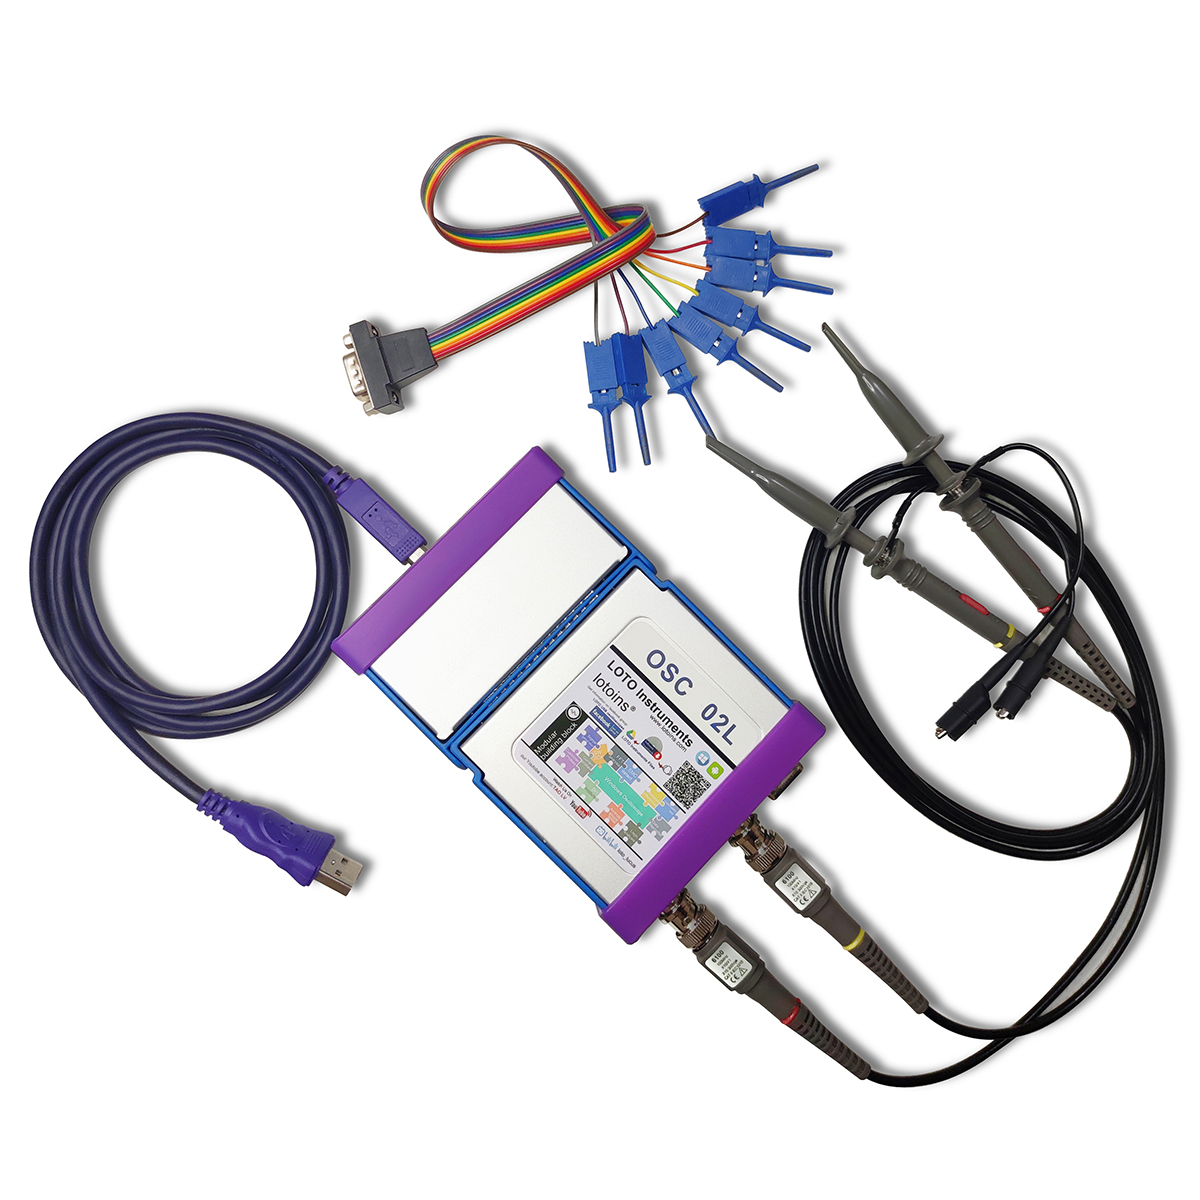  LOTO示波器USB示波器/逻辑分析仪/信号发生器